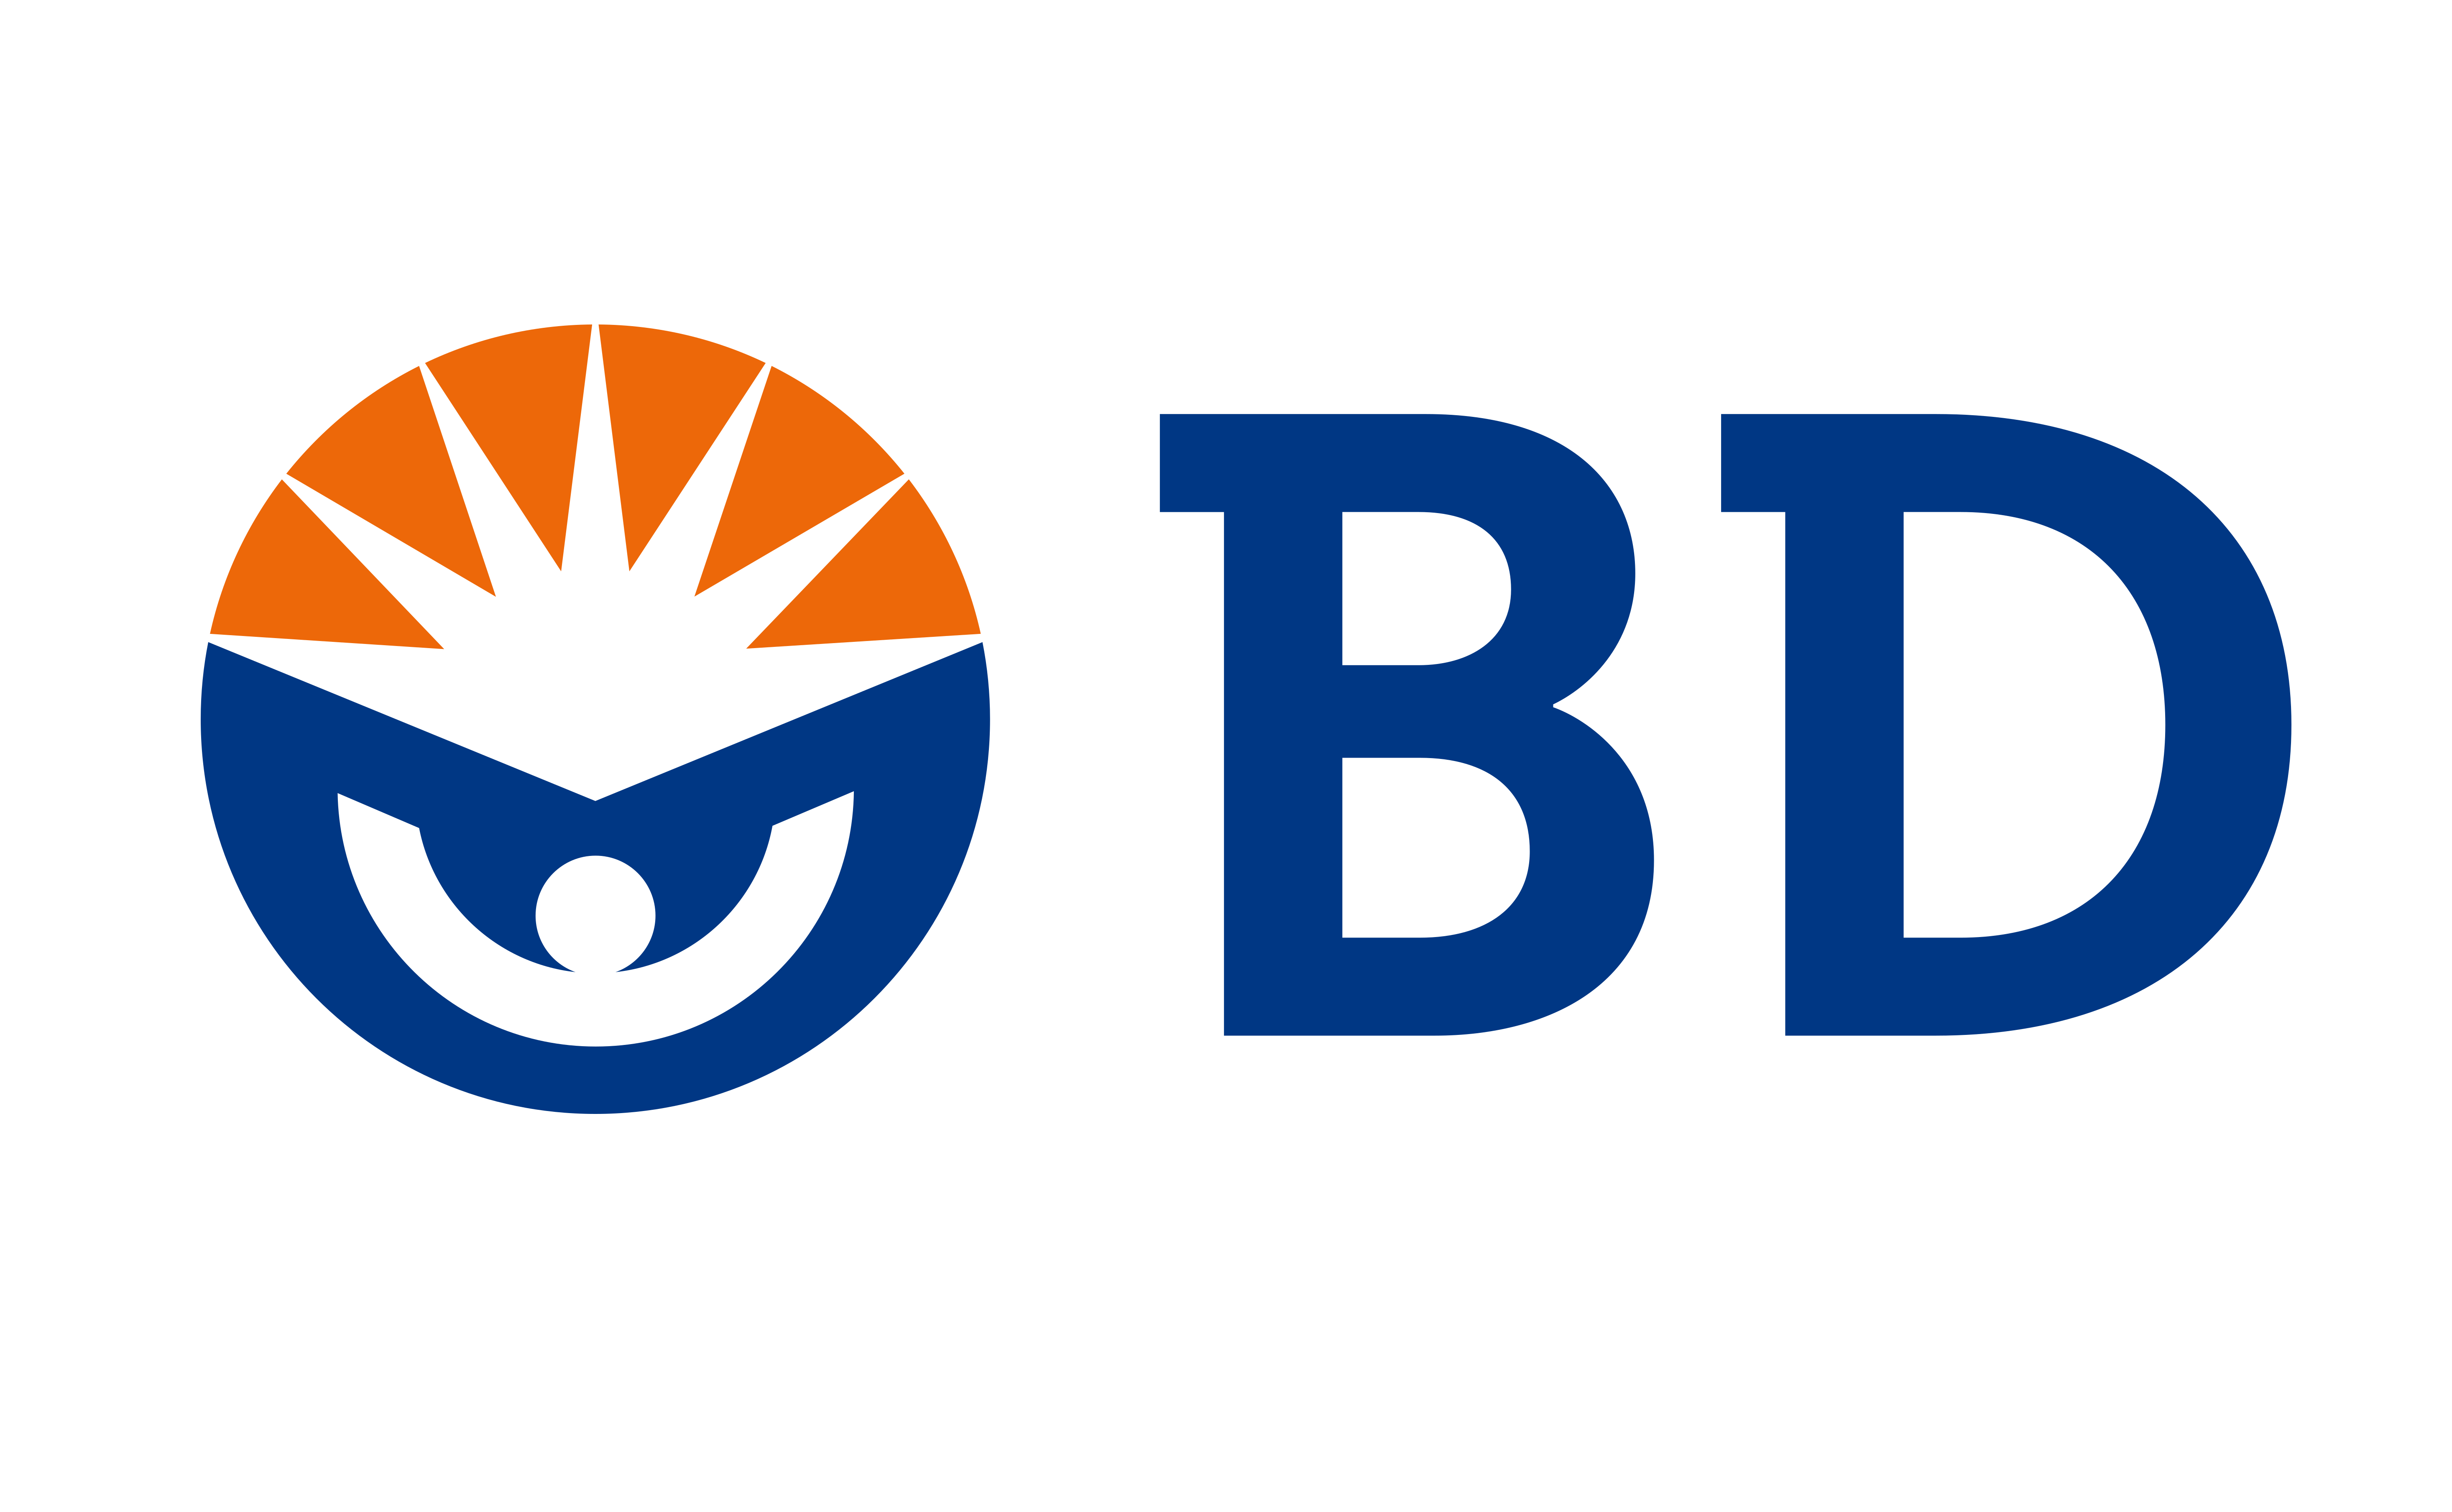 Becton_Dickinson_Logo_old